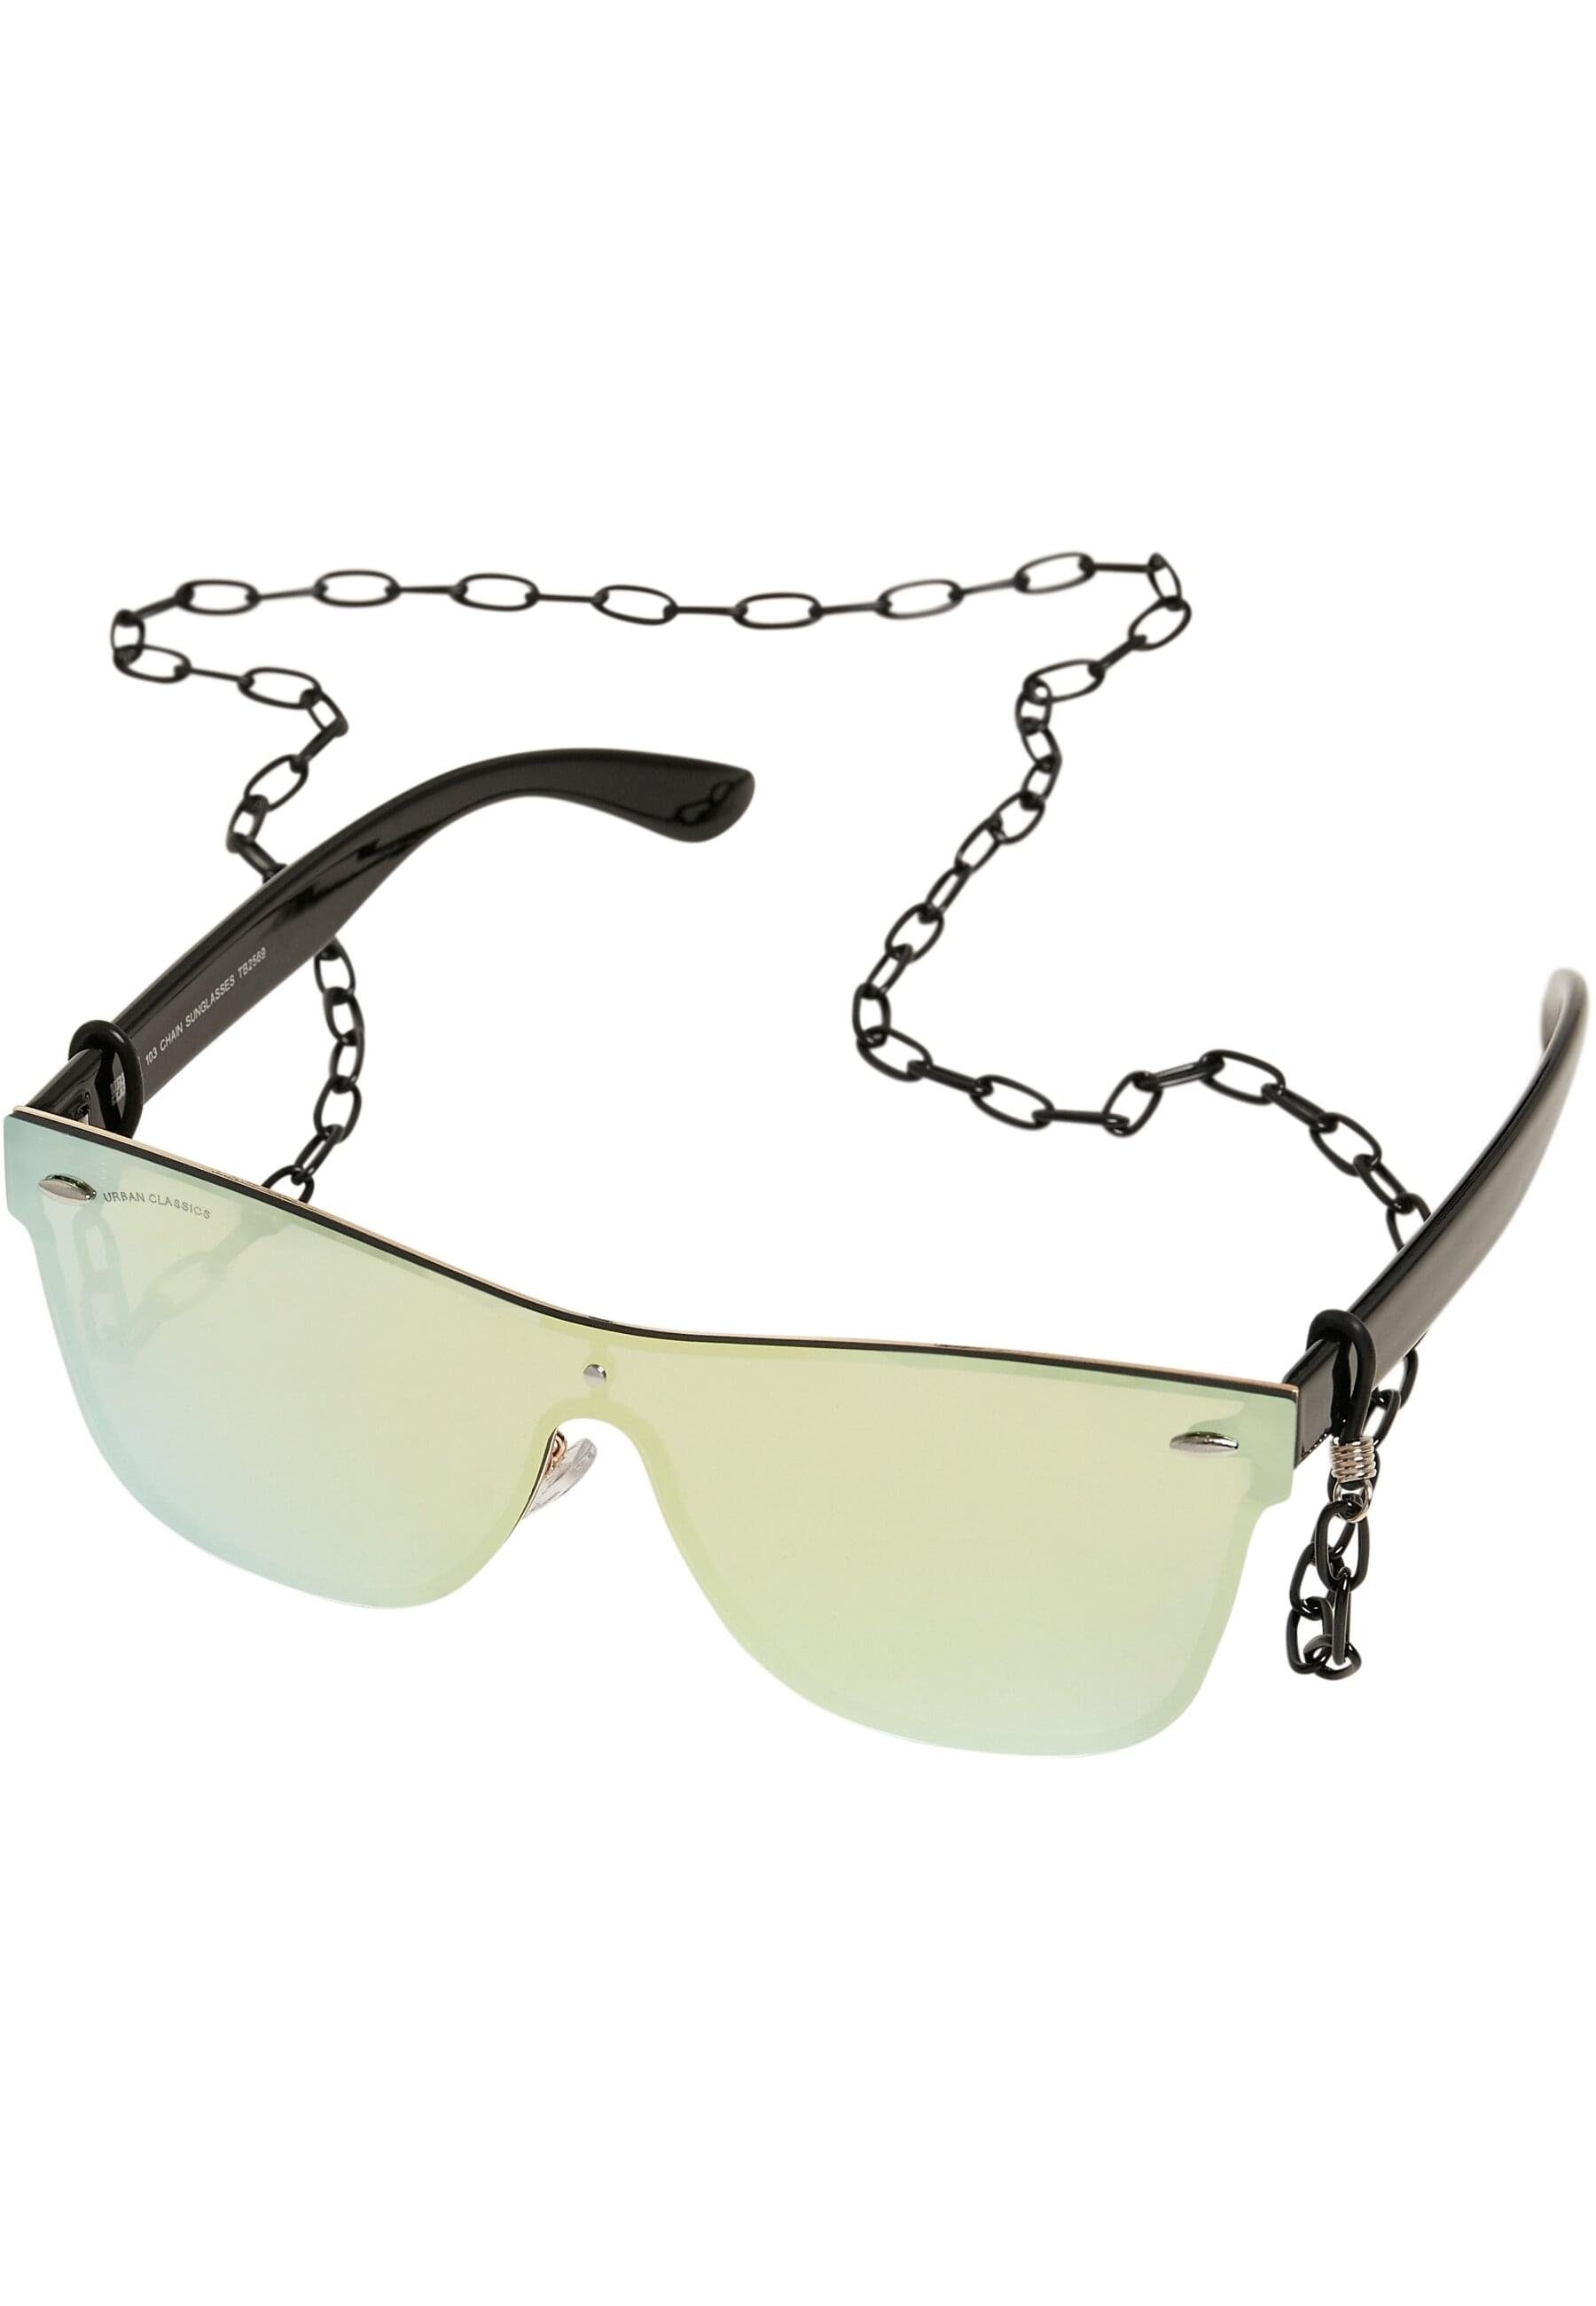 CLASSICS Unisex Sunglasses black/gold Chain URBAN 103 mirror Sonnenbrille